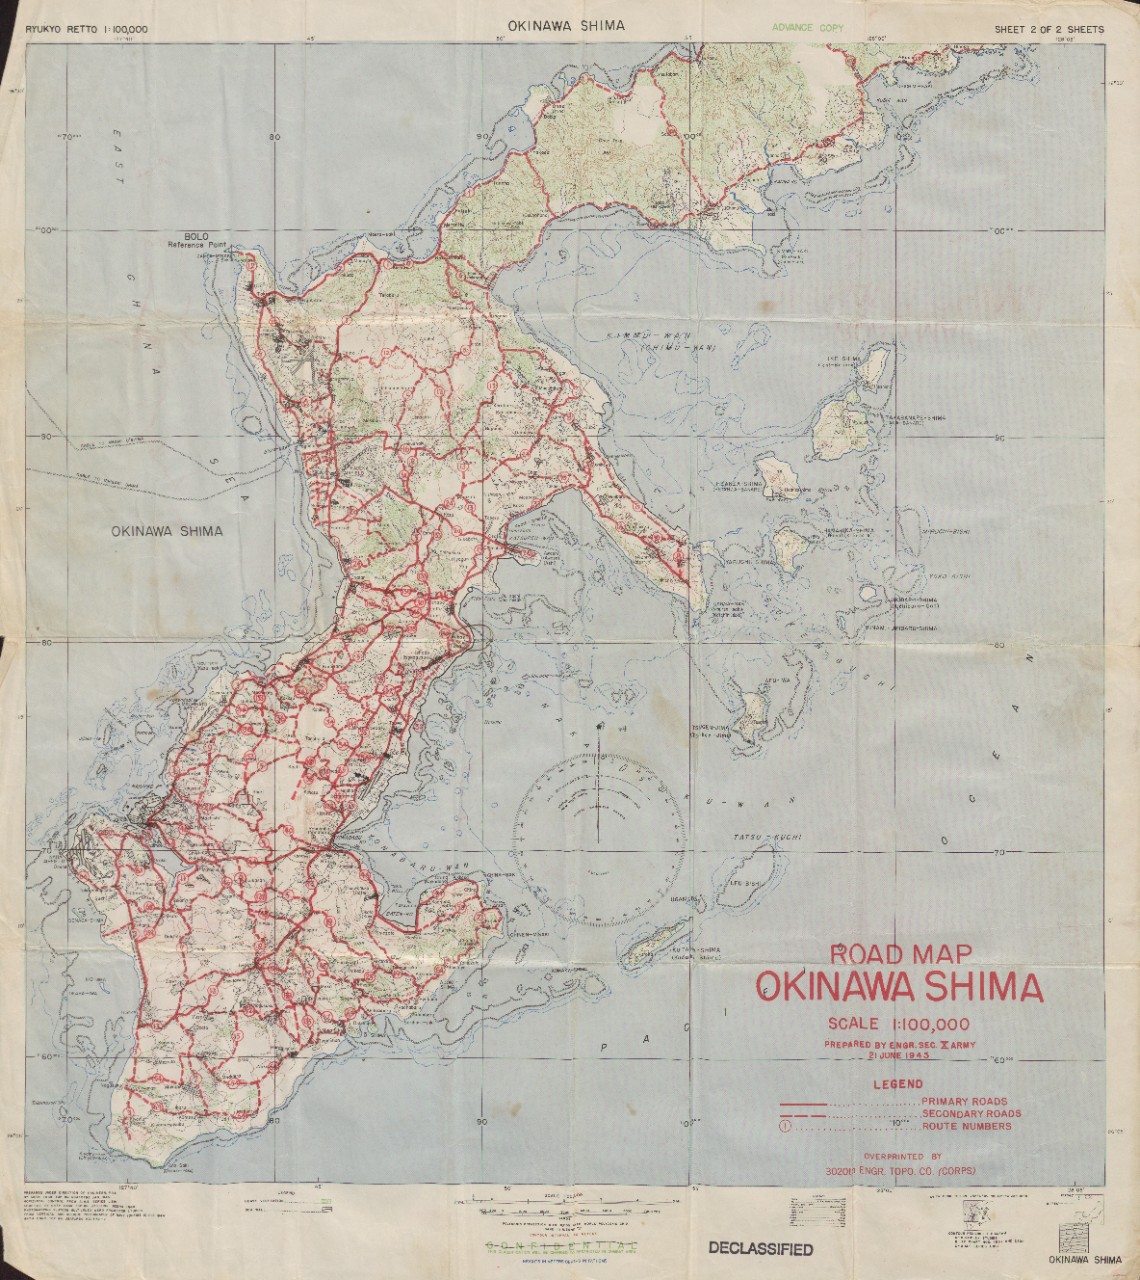 Okinawa Shima Road Map (2 of 2)